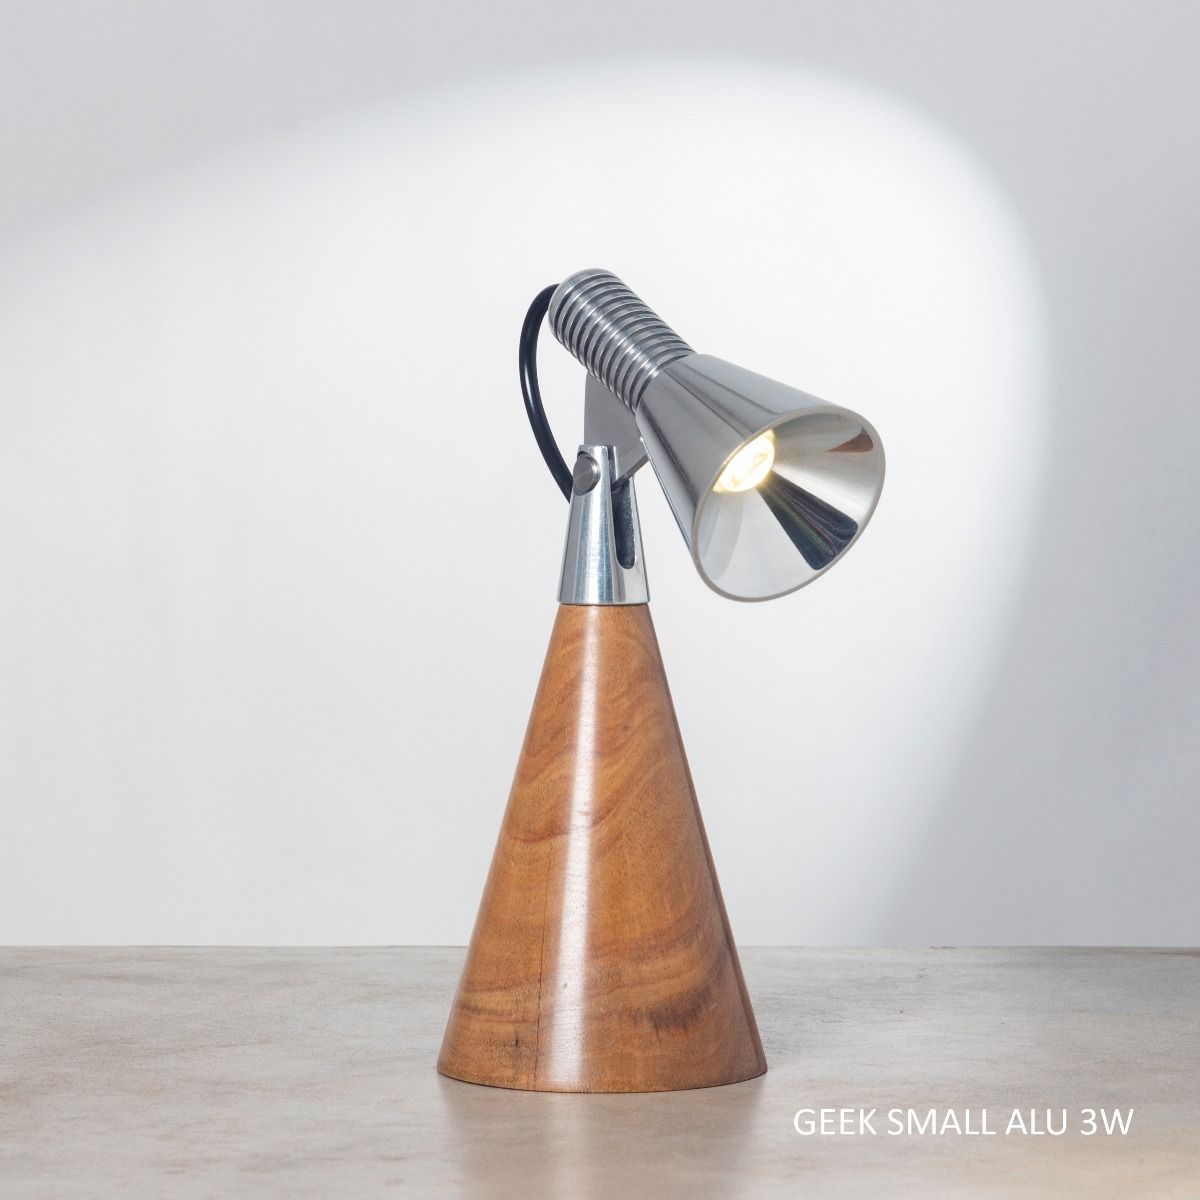 Geek S ALU 3W Table Lamp